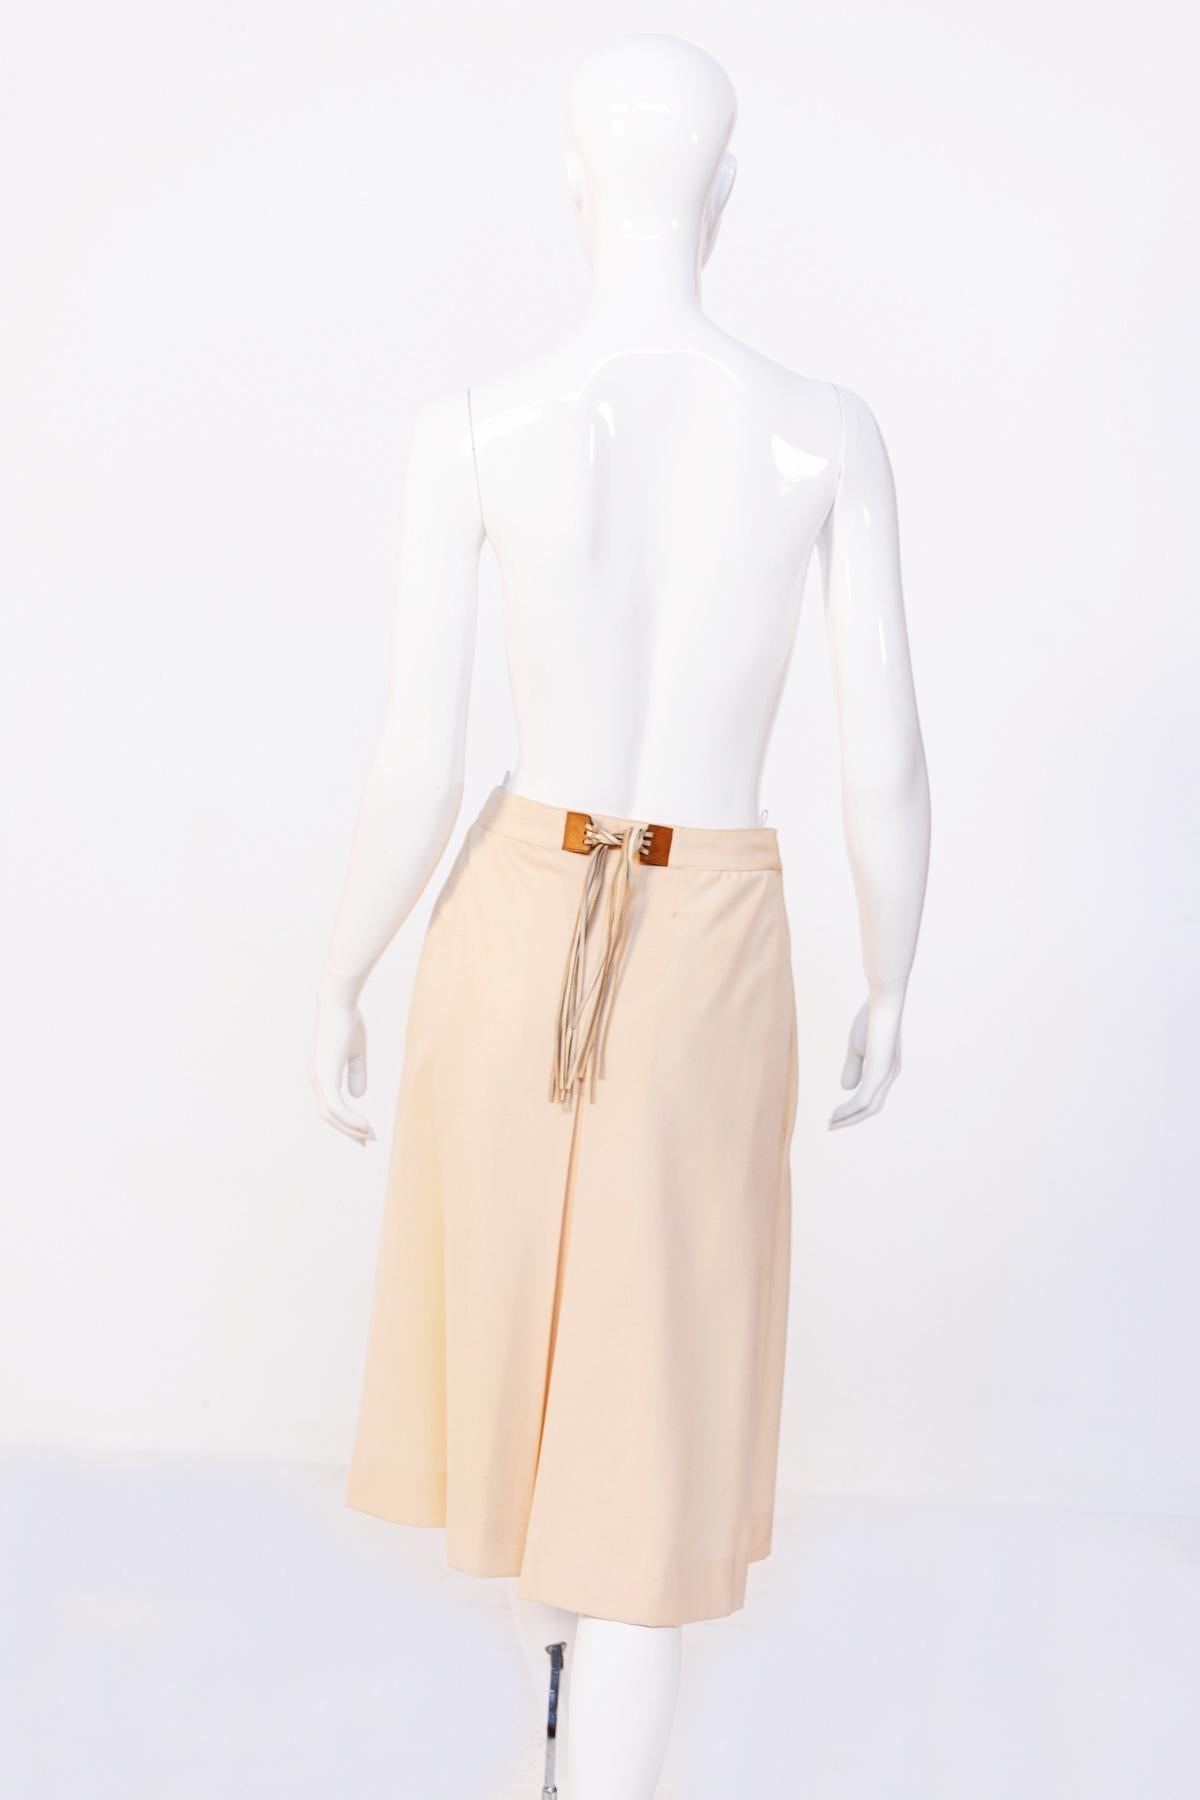 Vintage Skirt with Leather Belt For Sale 2